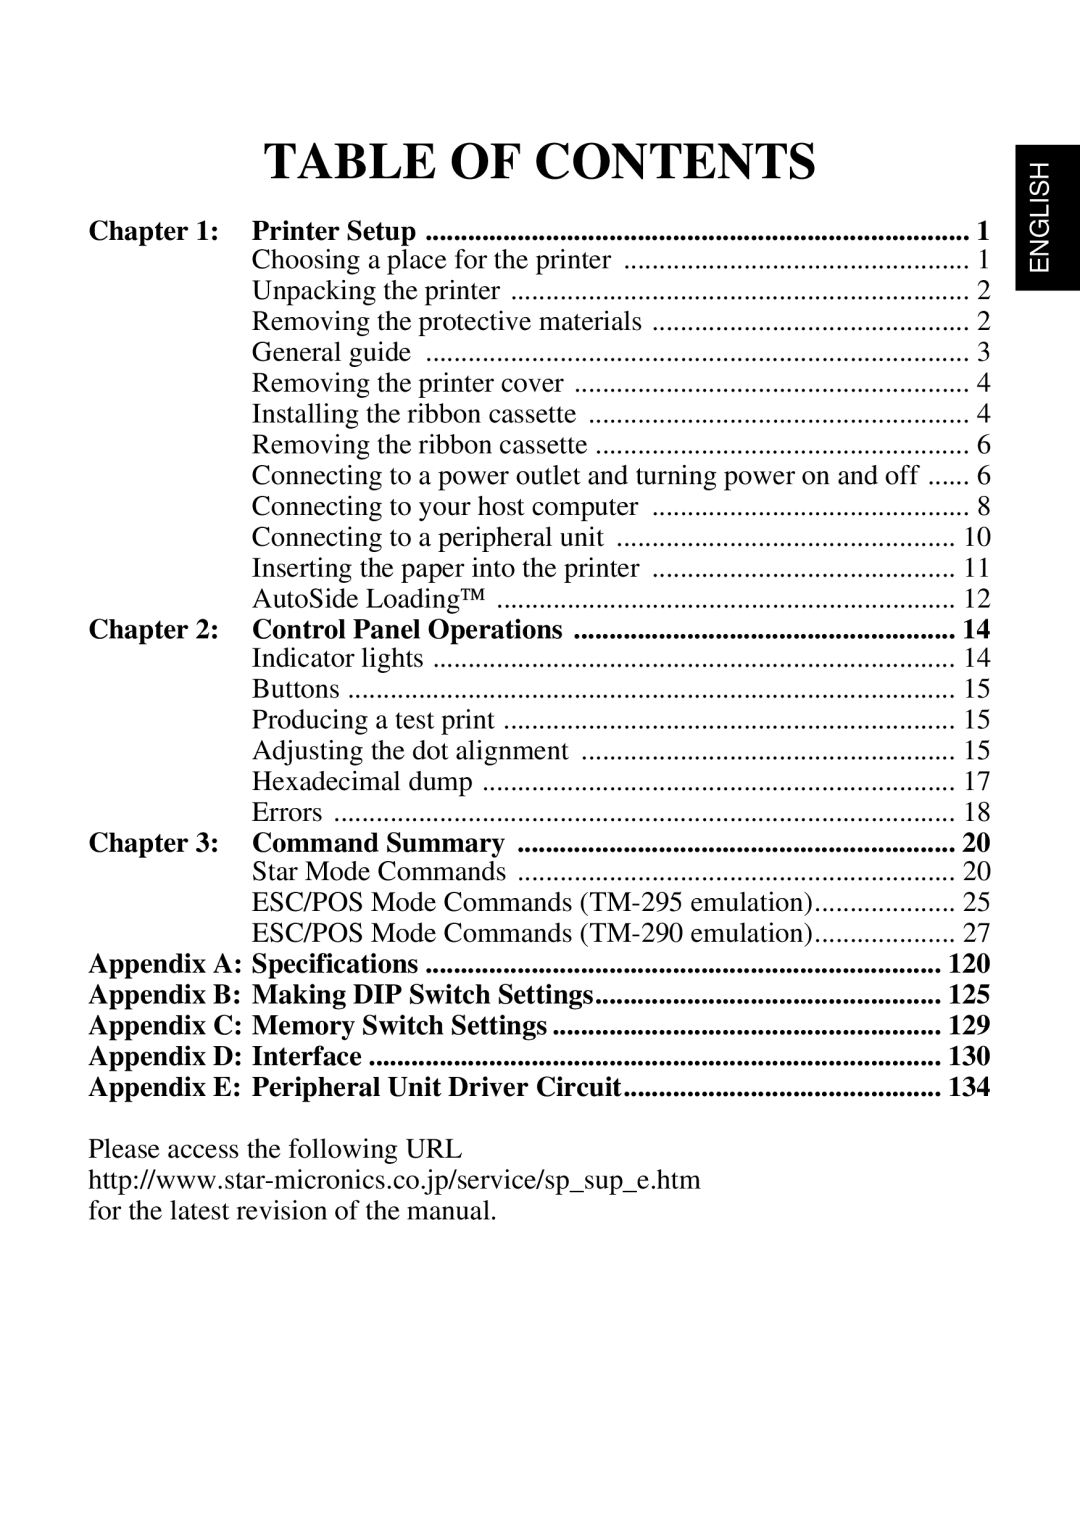 Star Micronics SP298 Table Of Contents, Chapter, ESC/POS Mode Commands TM-295 emulation, Printer Setup, Command Summary 